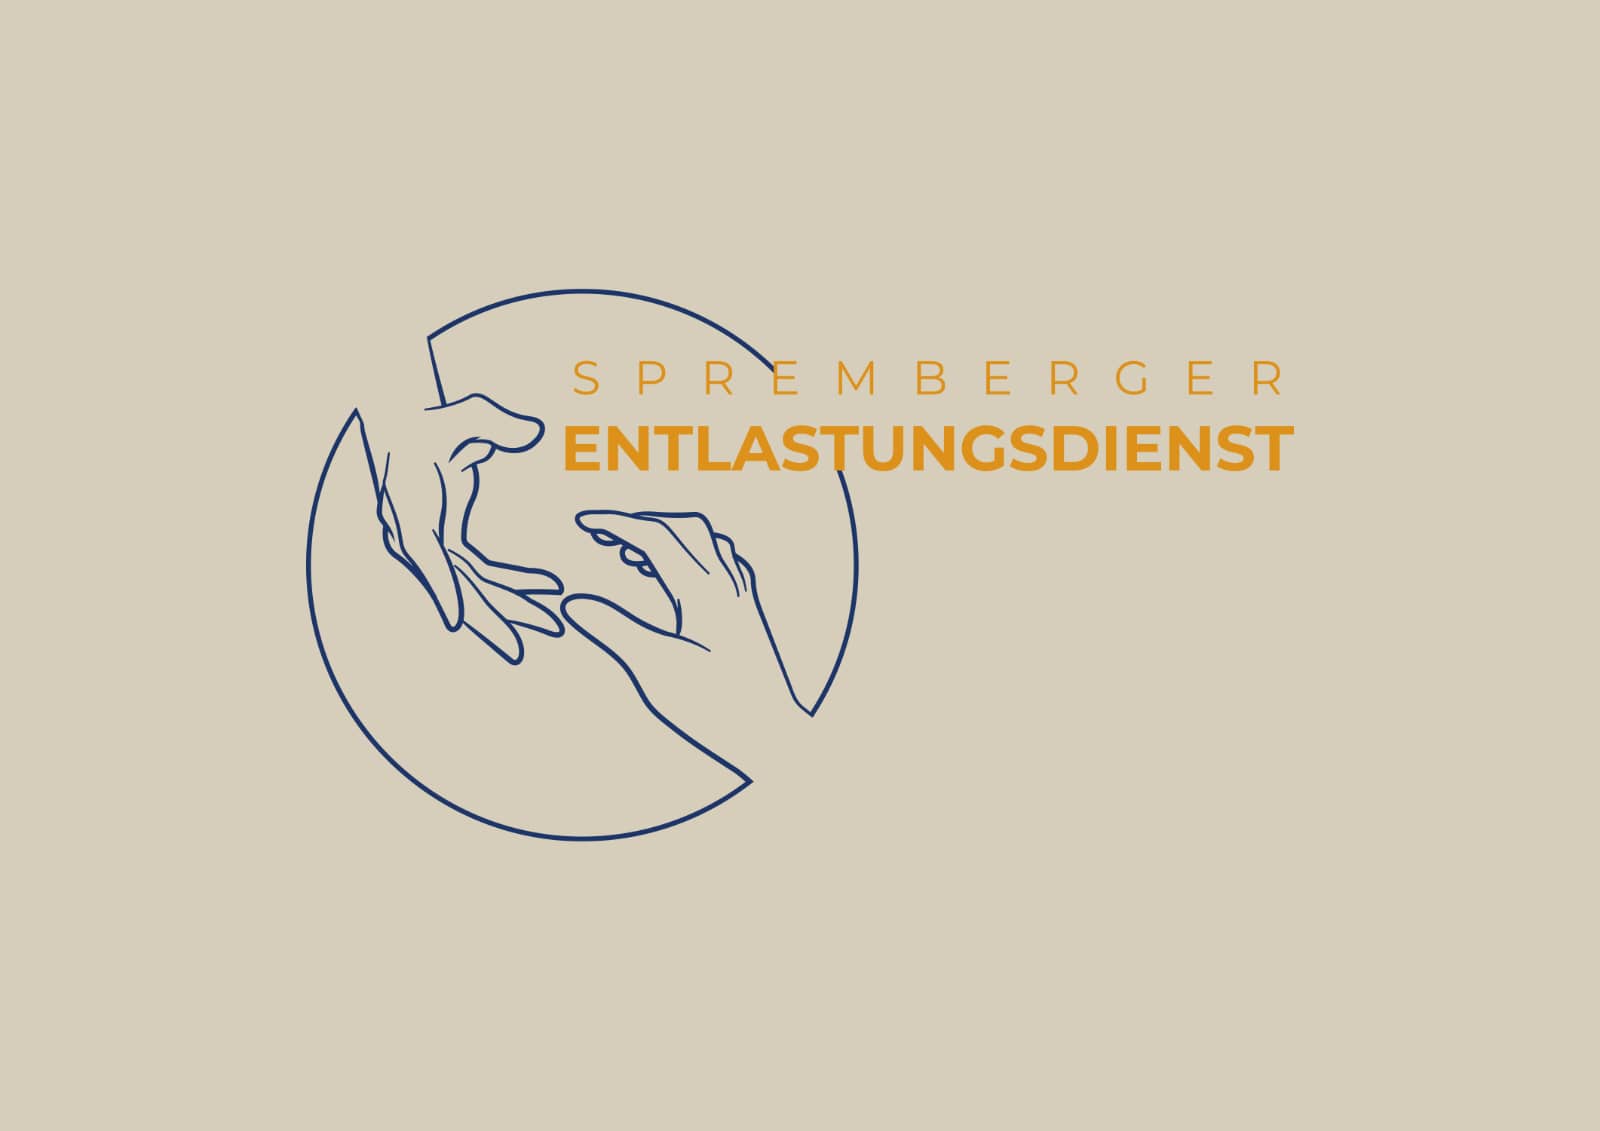 kiko kreativagentur - Logo & Design